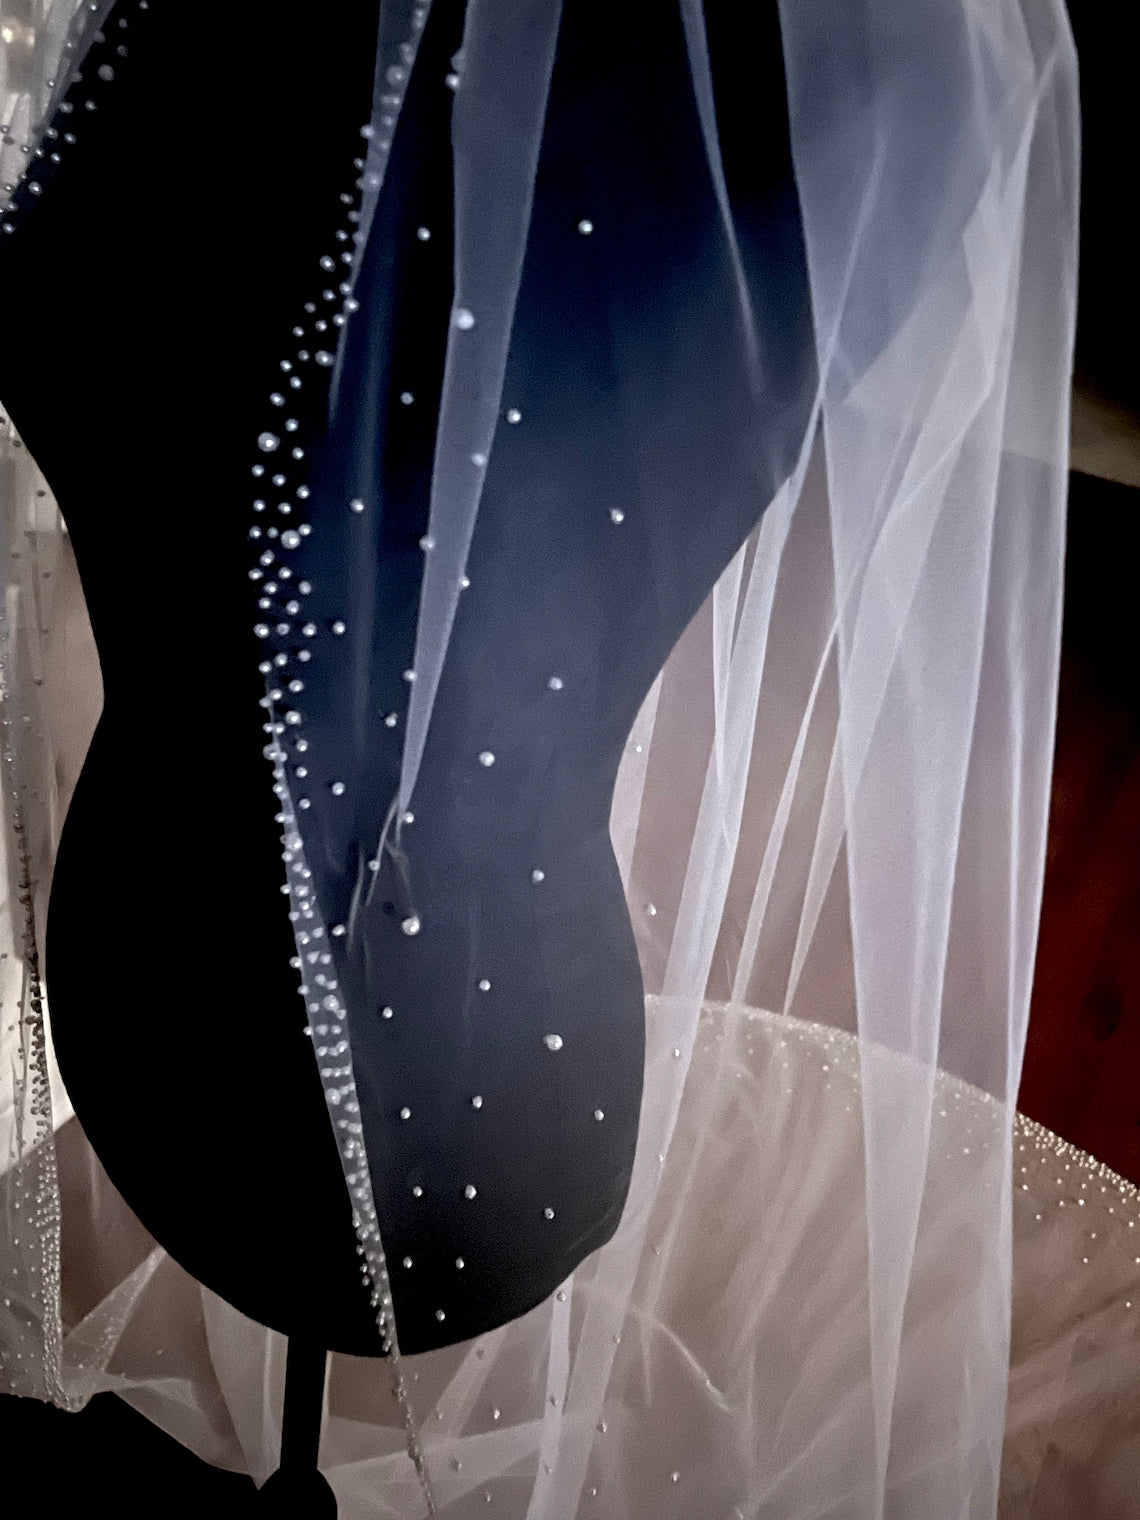 Kiera - Enchanting scattered pearl wedding veil